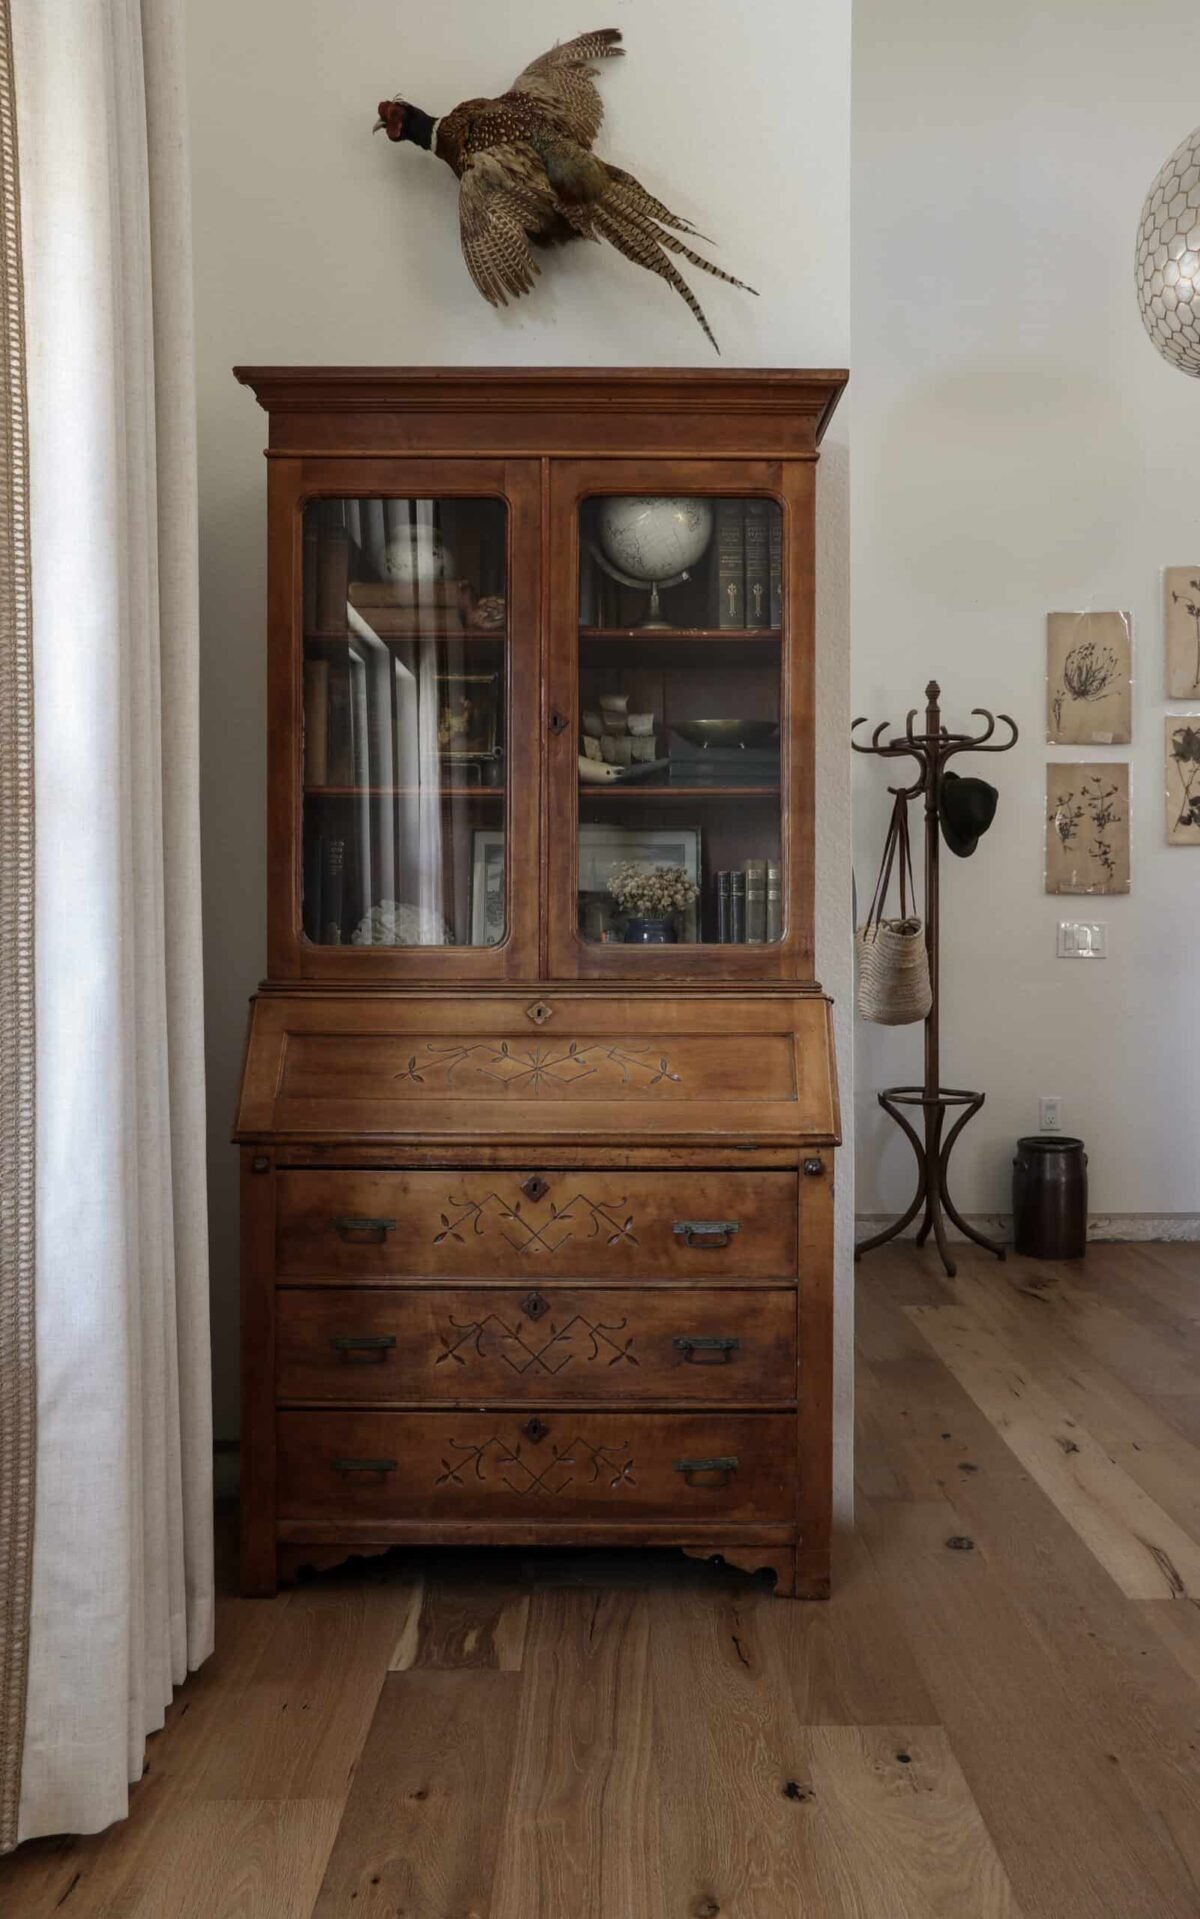 antique secretary desk in a living room with hardwood floors